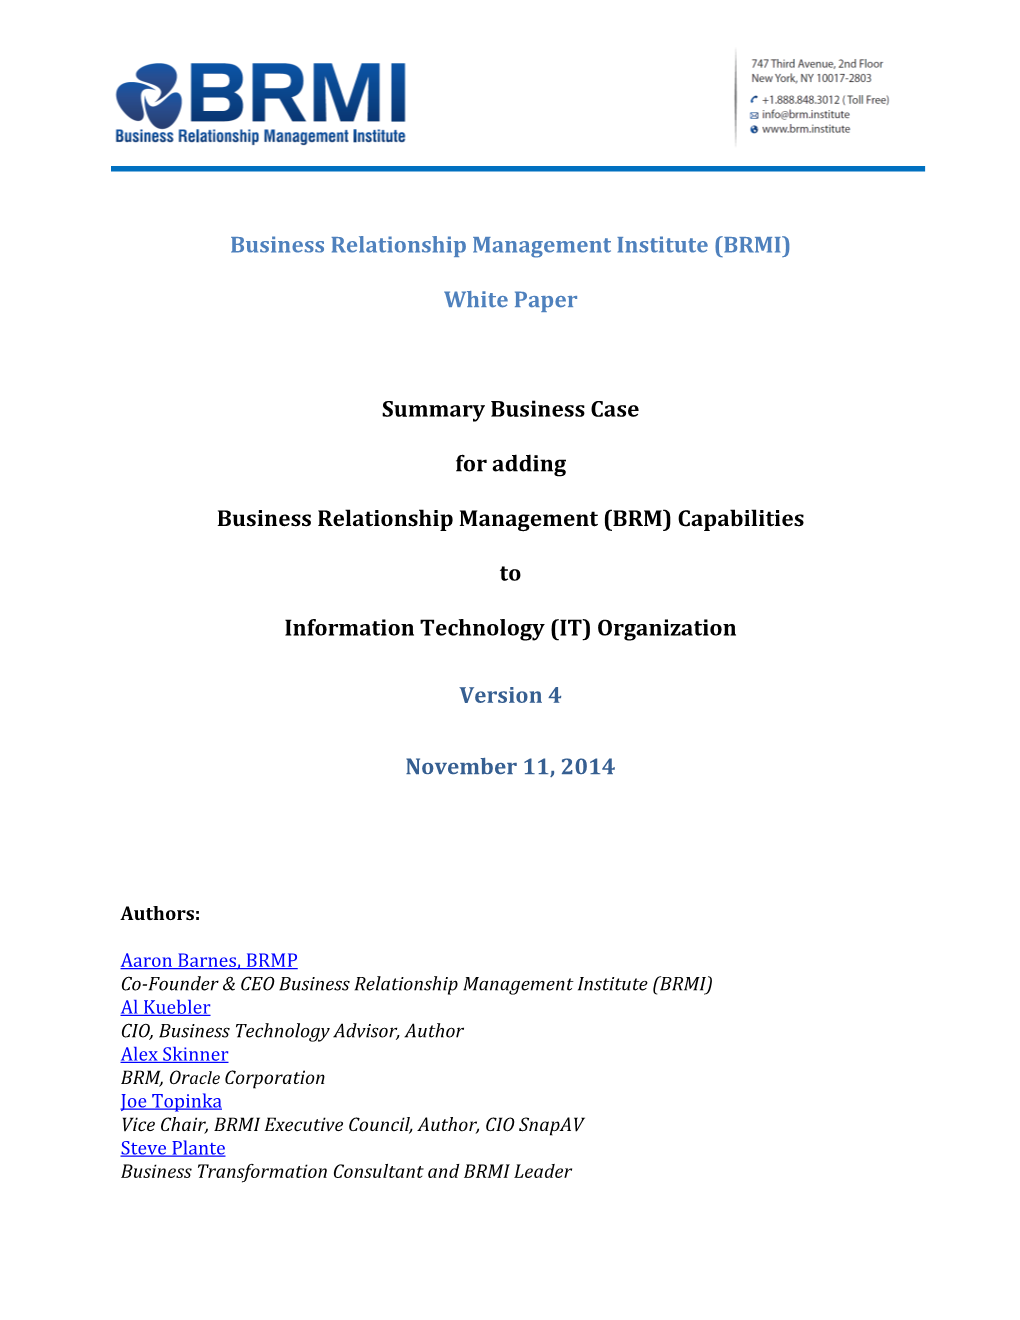 Business Relationship Management Institute (BRMI) White Paper